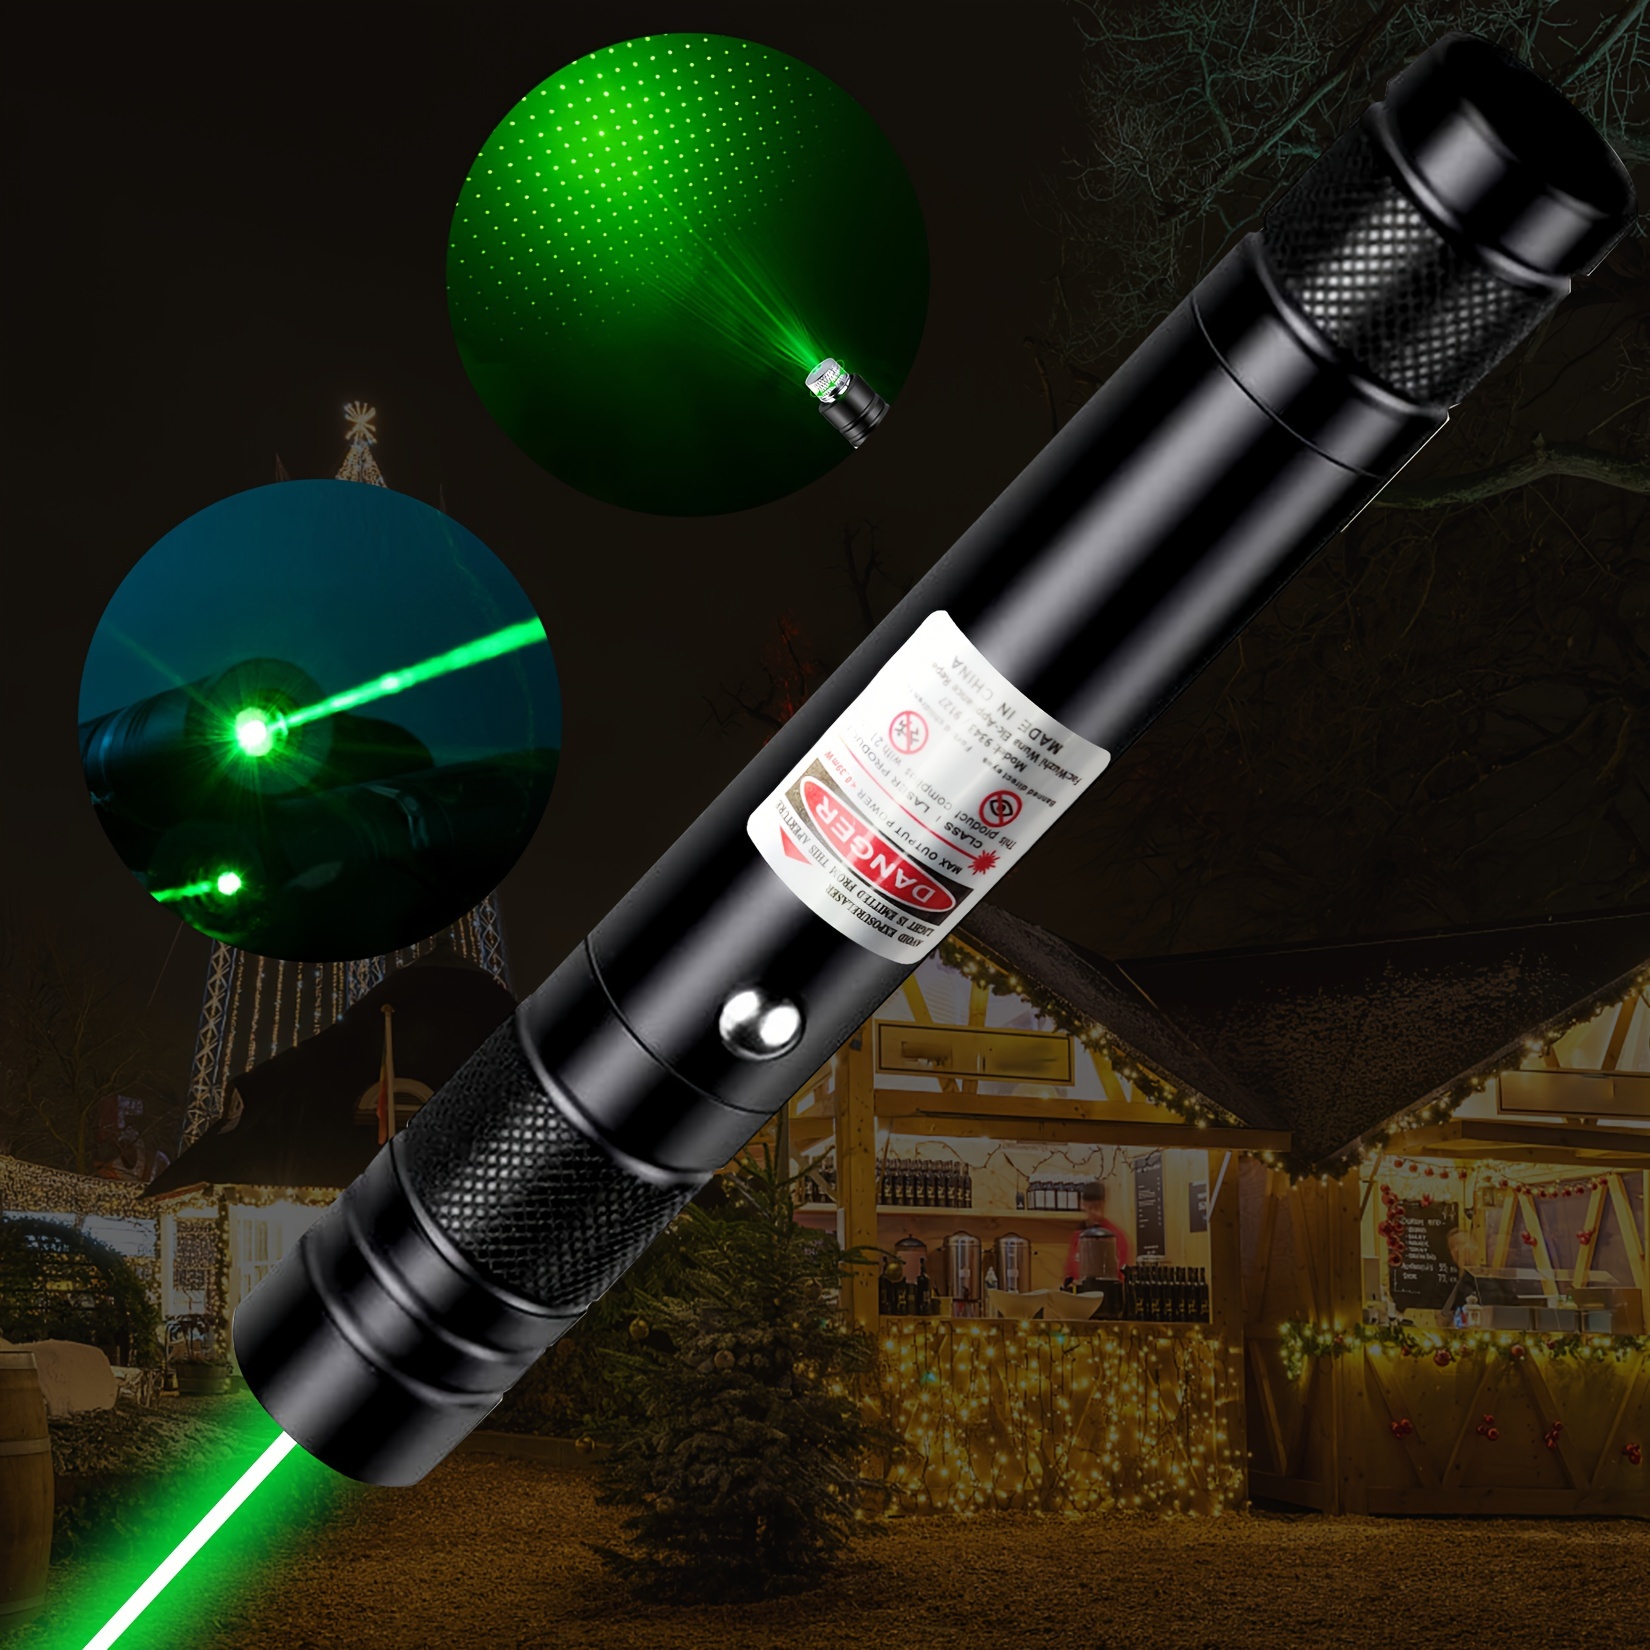  Puntero láser verde de alta potencia, puntero láser verde  fuerte de largo alcance, puntero láser recargable por USB, para  presentaciones, enseñanza astronomía, caza : Productos de Oficina